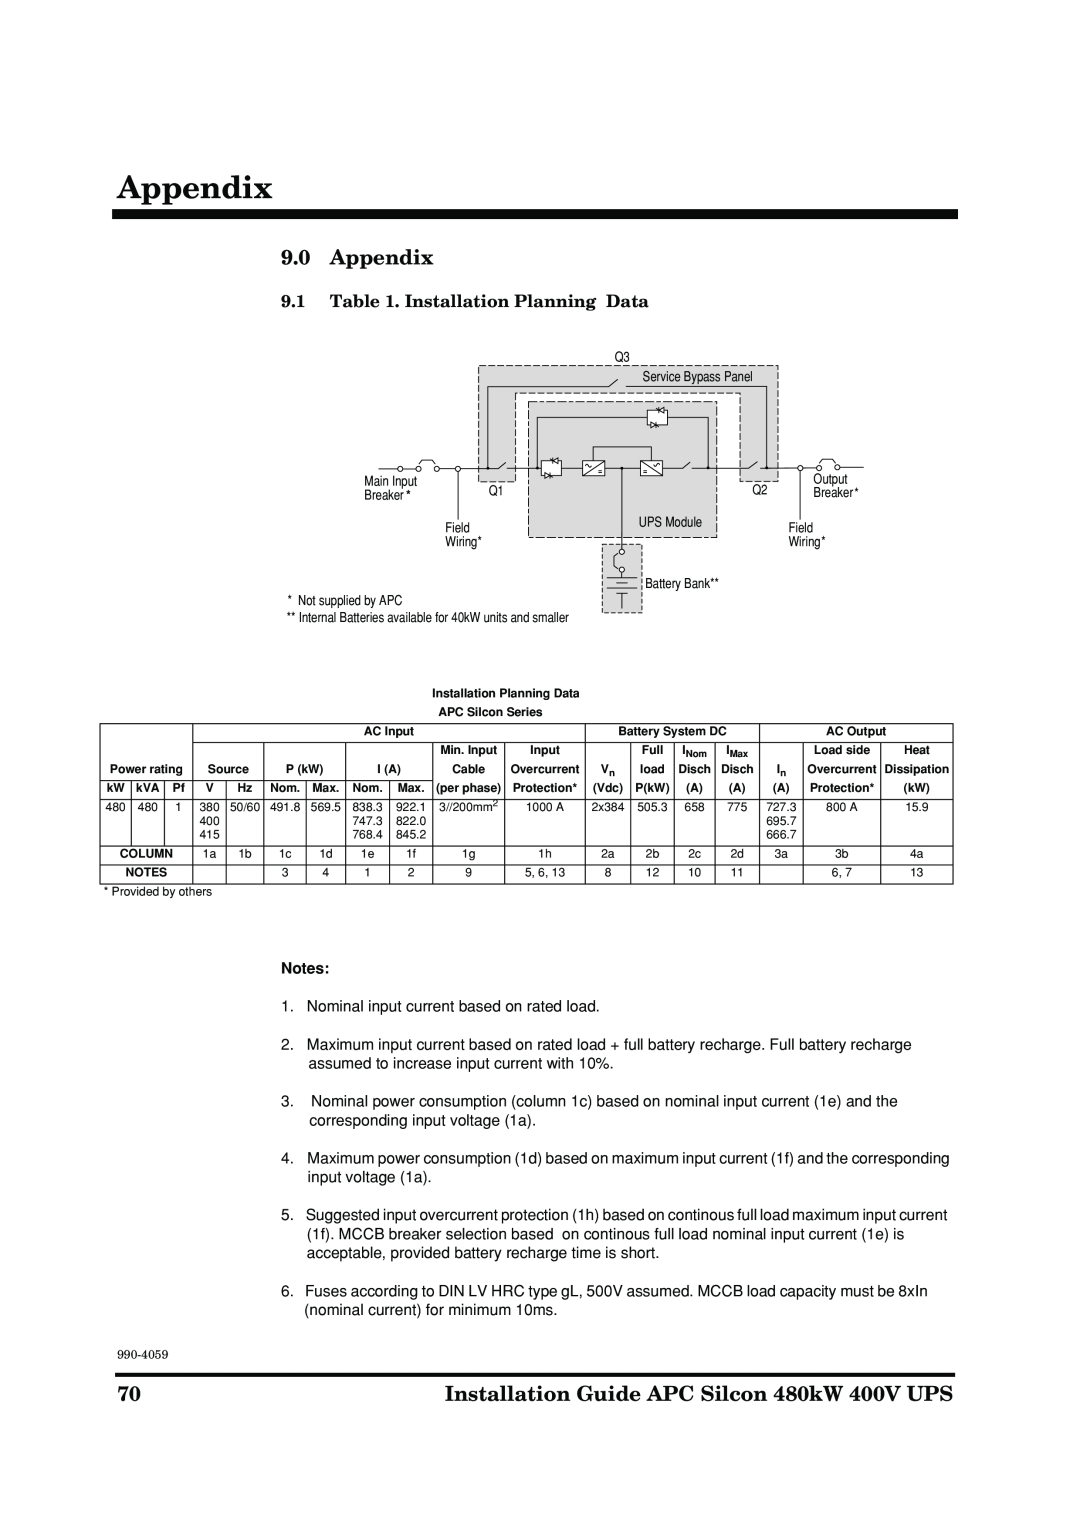 American Power Conversion manual Appendix, Installation Planning Data, Installation Guide APC Silcon 480kW 400V UPS 